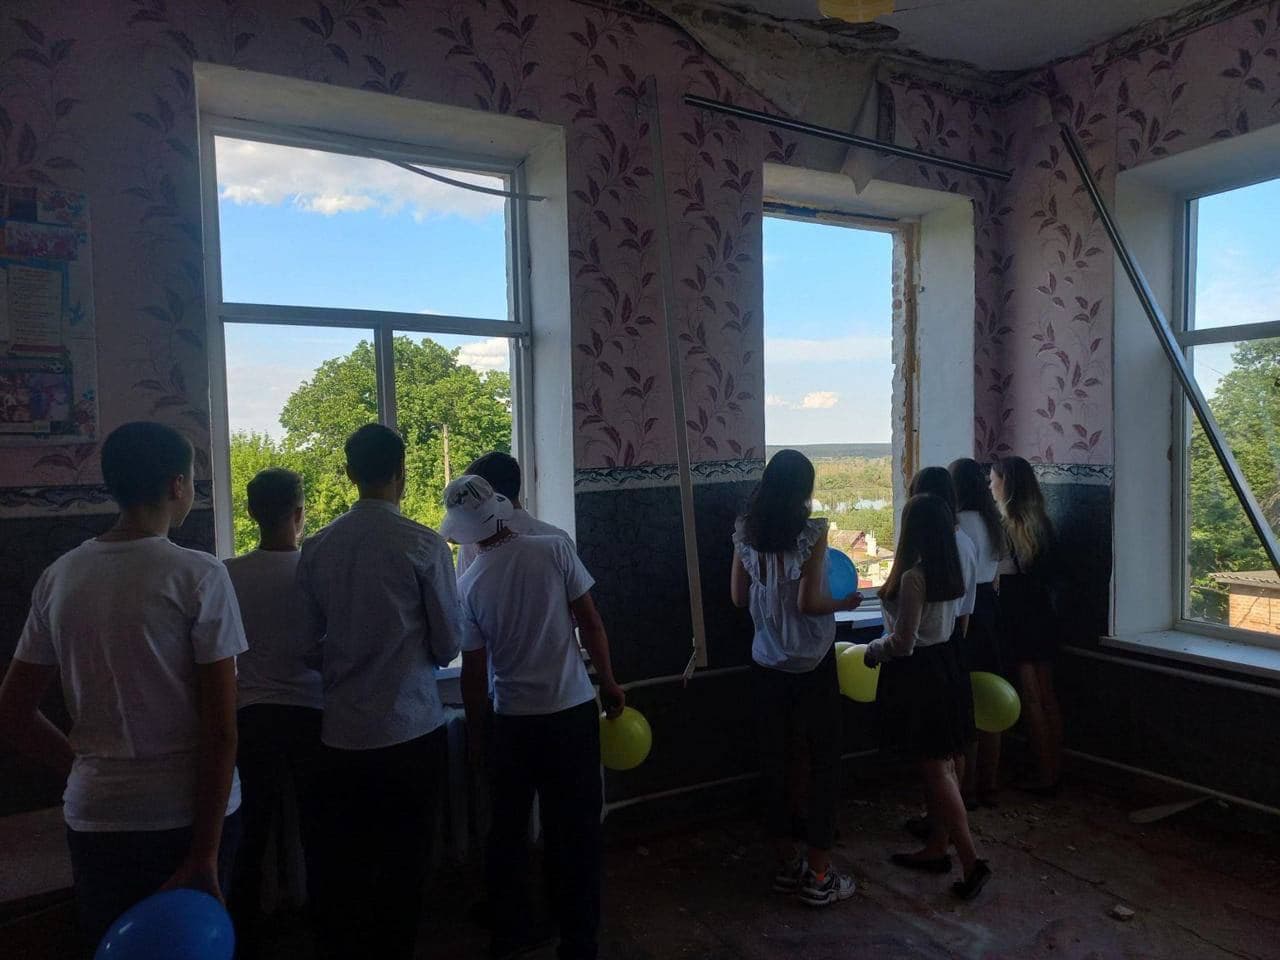 Graduation album on the ruins - in Novgorod-Seversk Chernihiv region